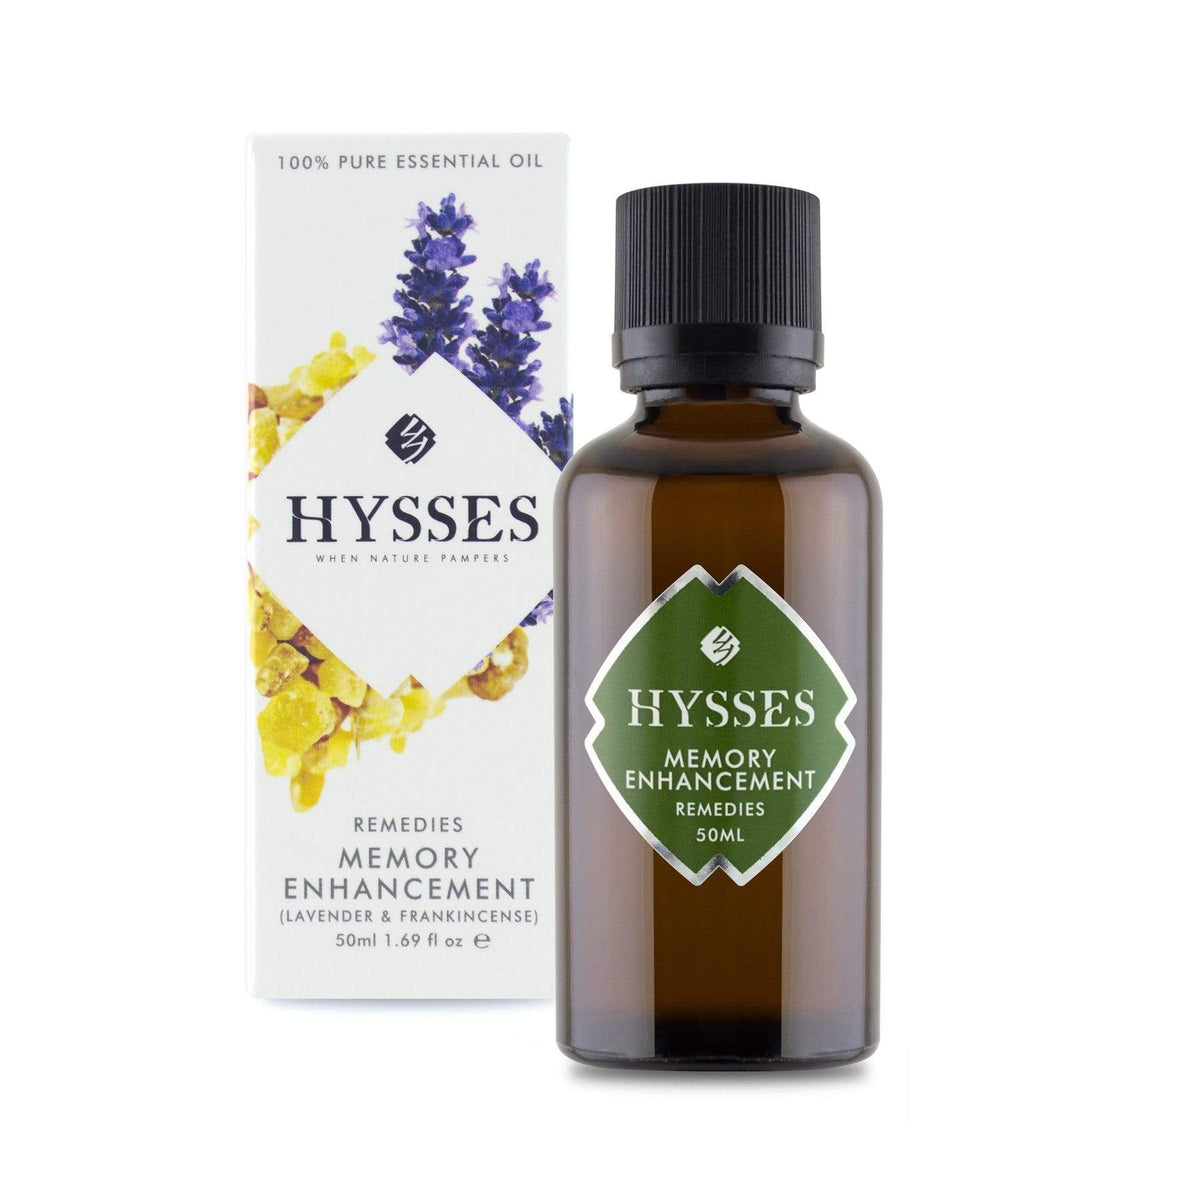 Hysses Essential Oil 50ml Remedies, Memory Enhancement